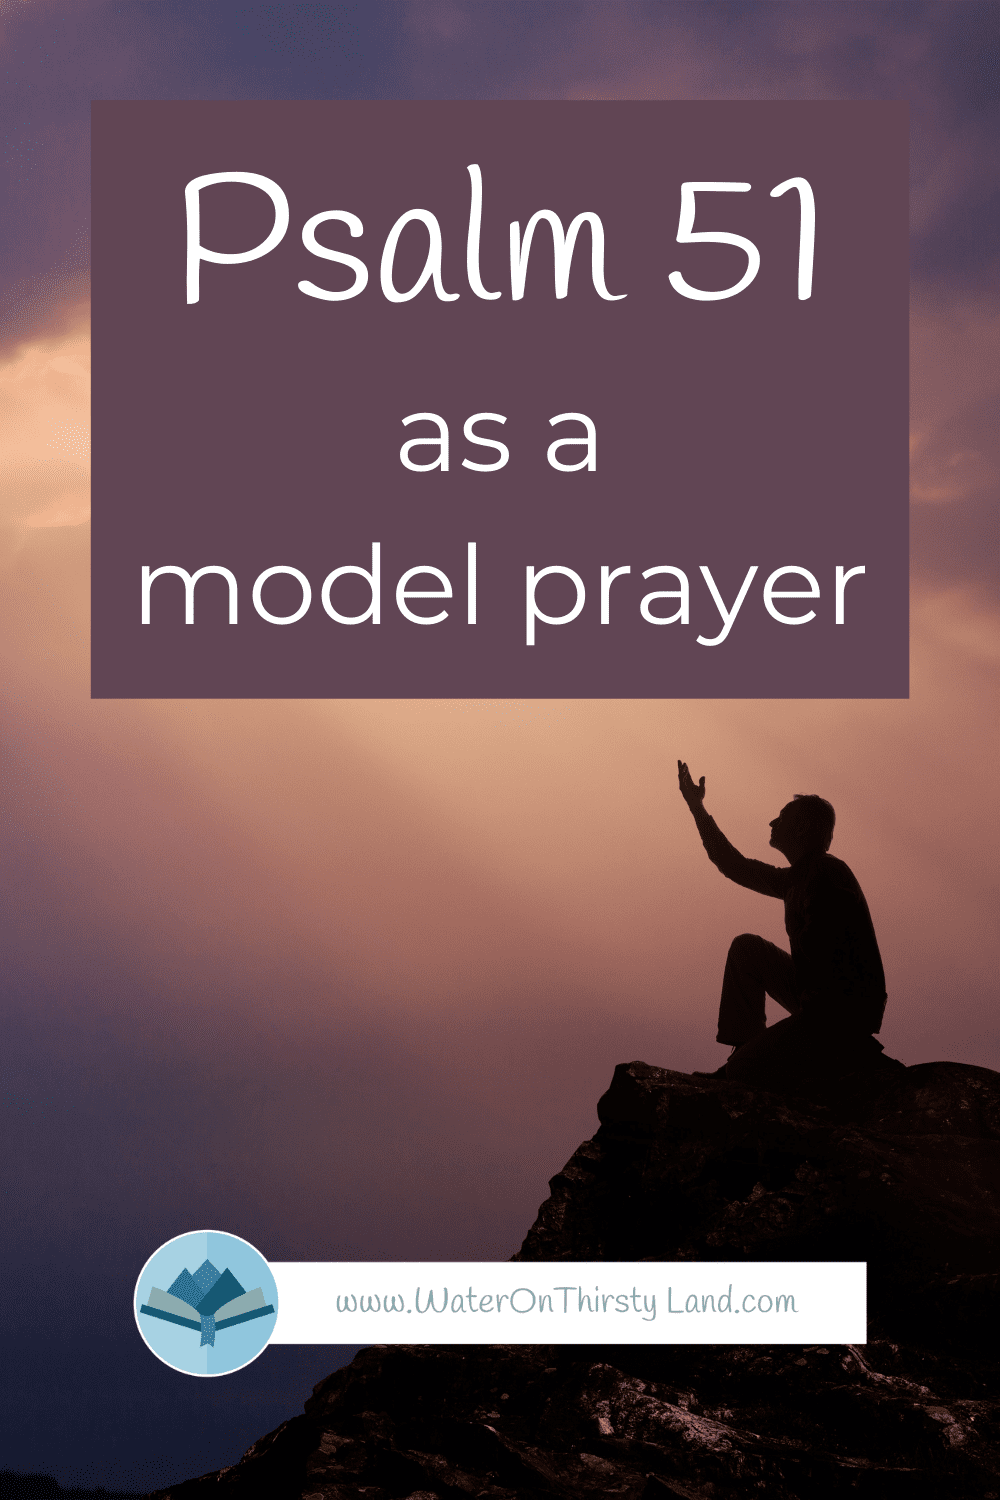 Psalm 51 as a model prayer